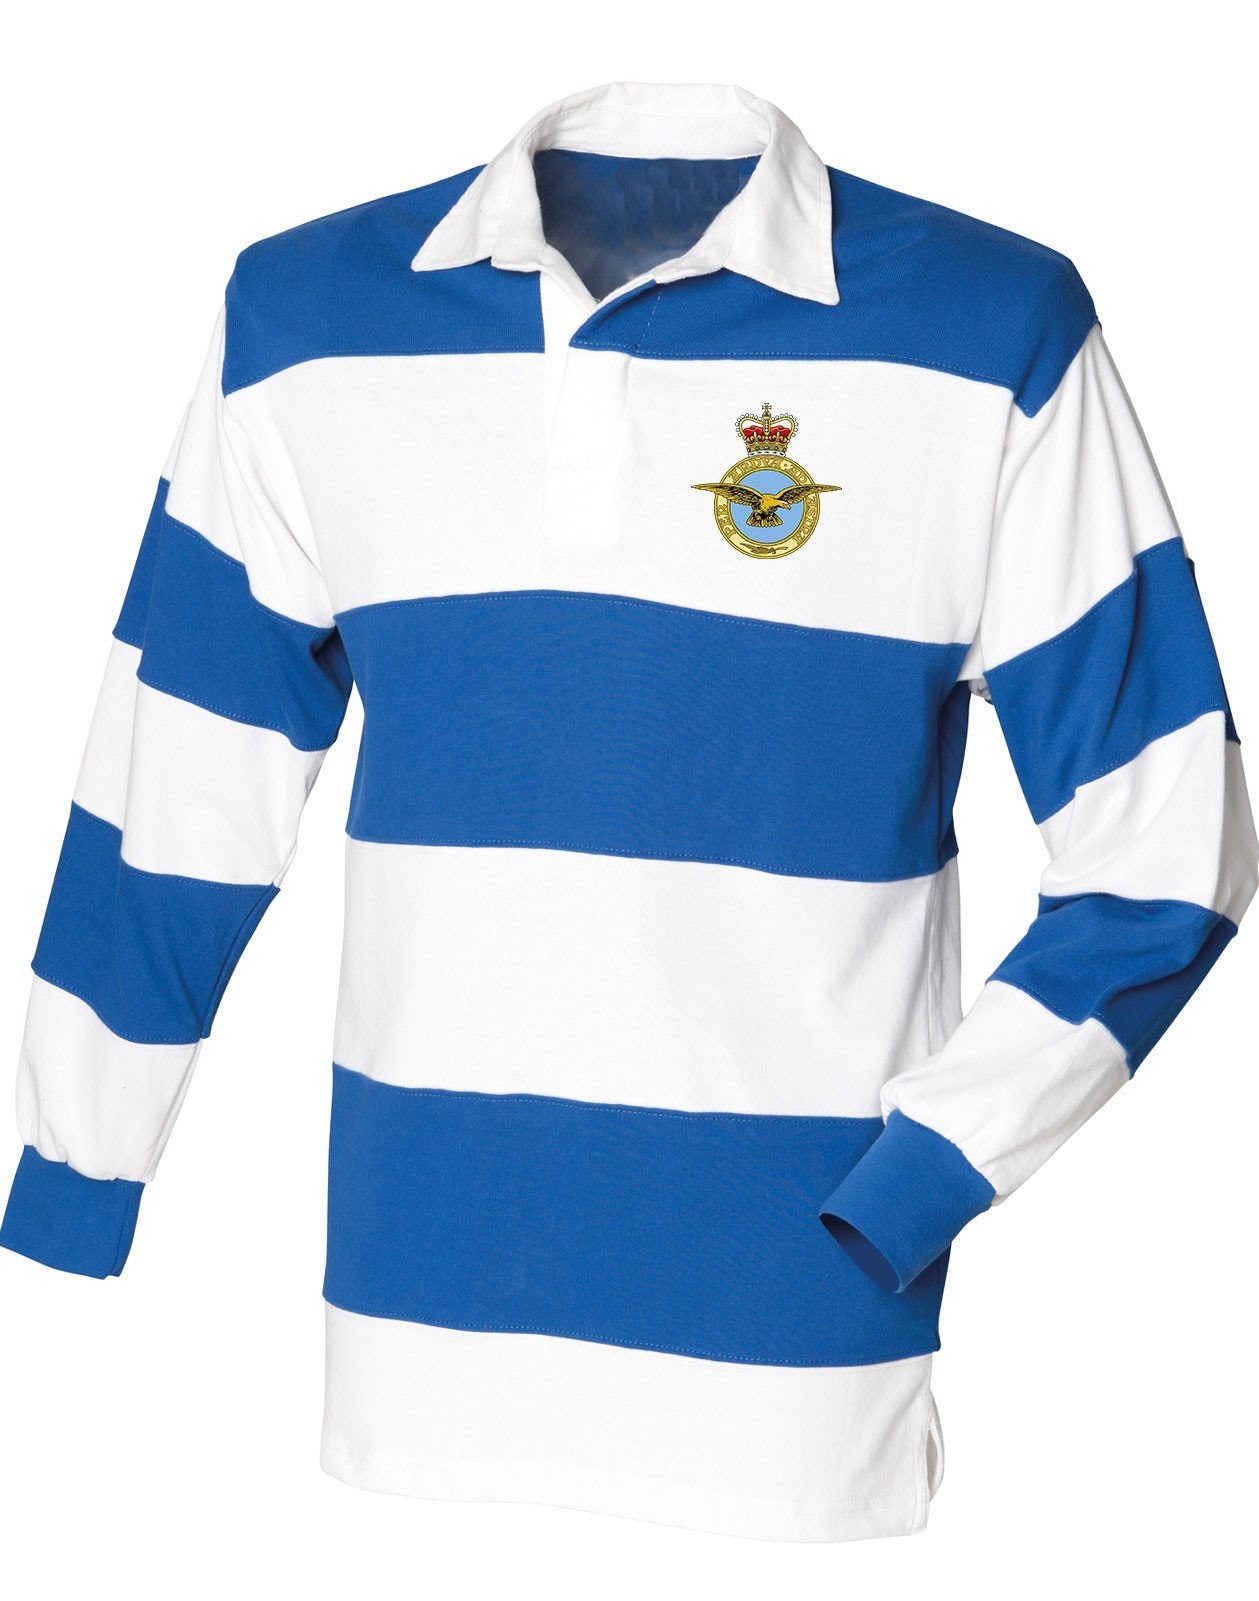 RAF (Royal Air Force) Rugby Shirt – The Regimental Shop